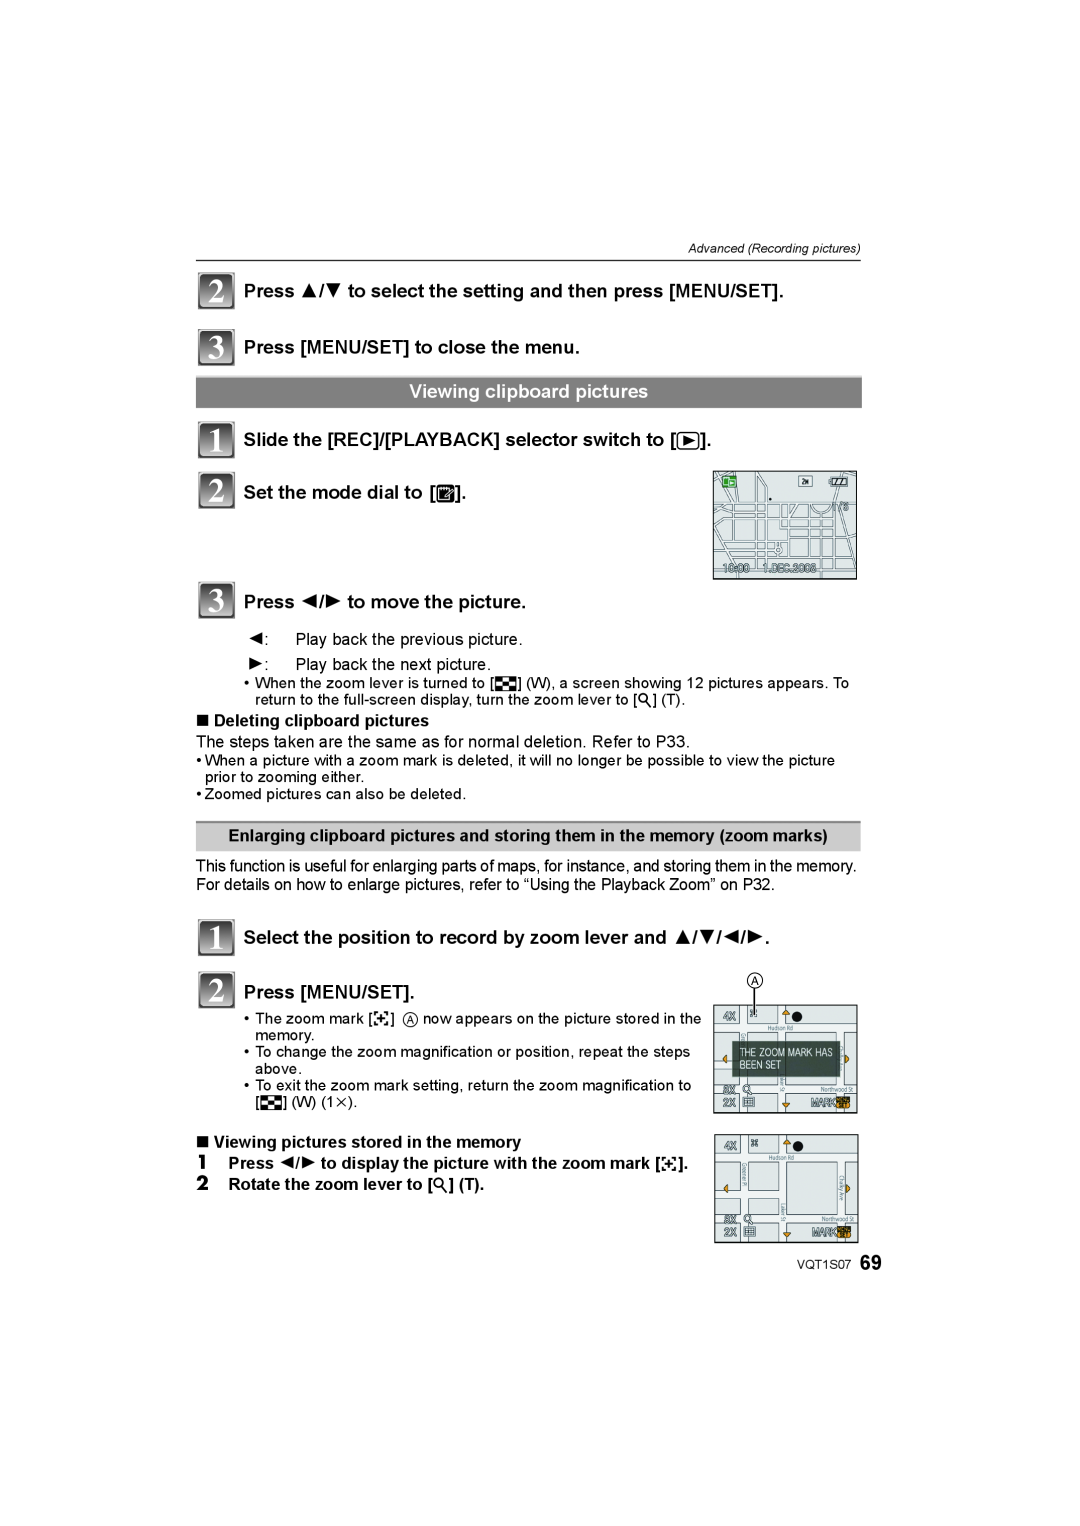 Panasonic DMC-FX38 Press 3/4 to select the setting and then press MENU/SET, Viewing clipboard pictures, Press MENU/SET 